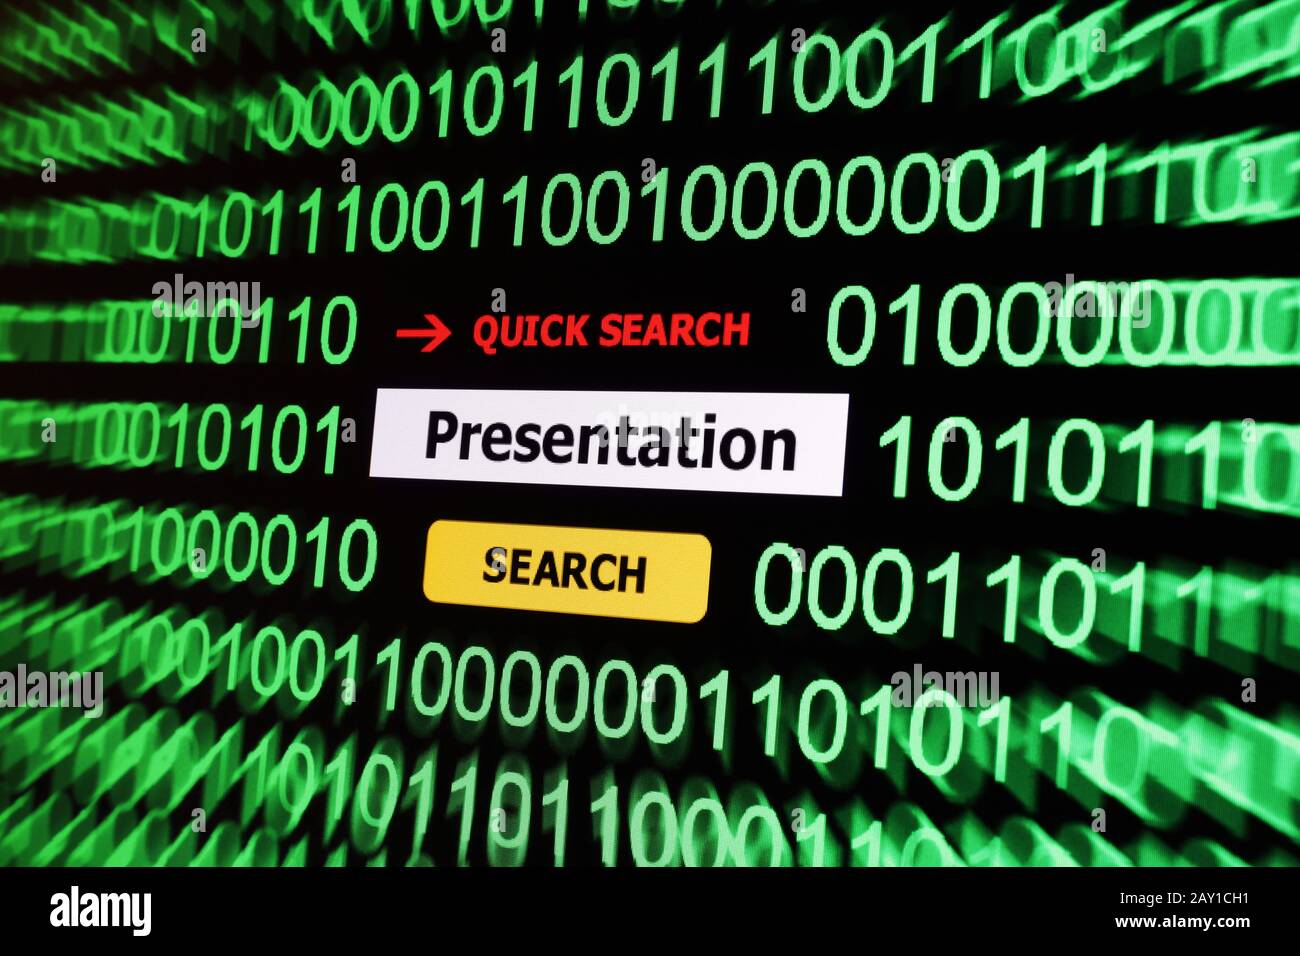 Search for presentation Stock Photo